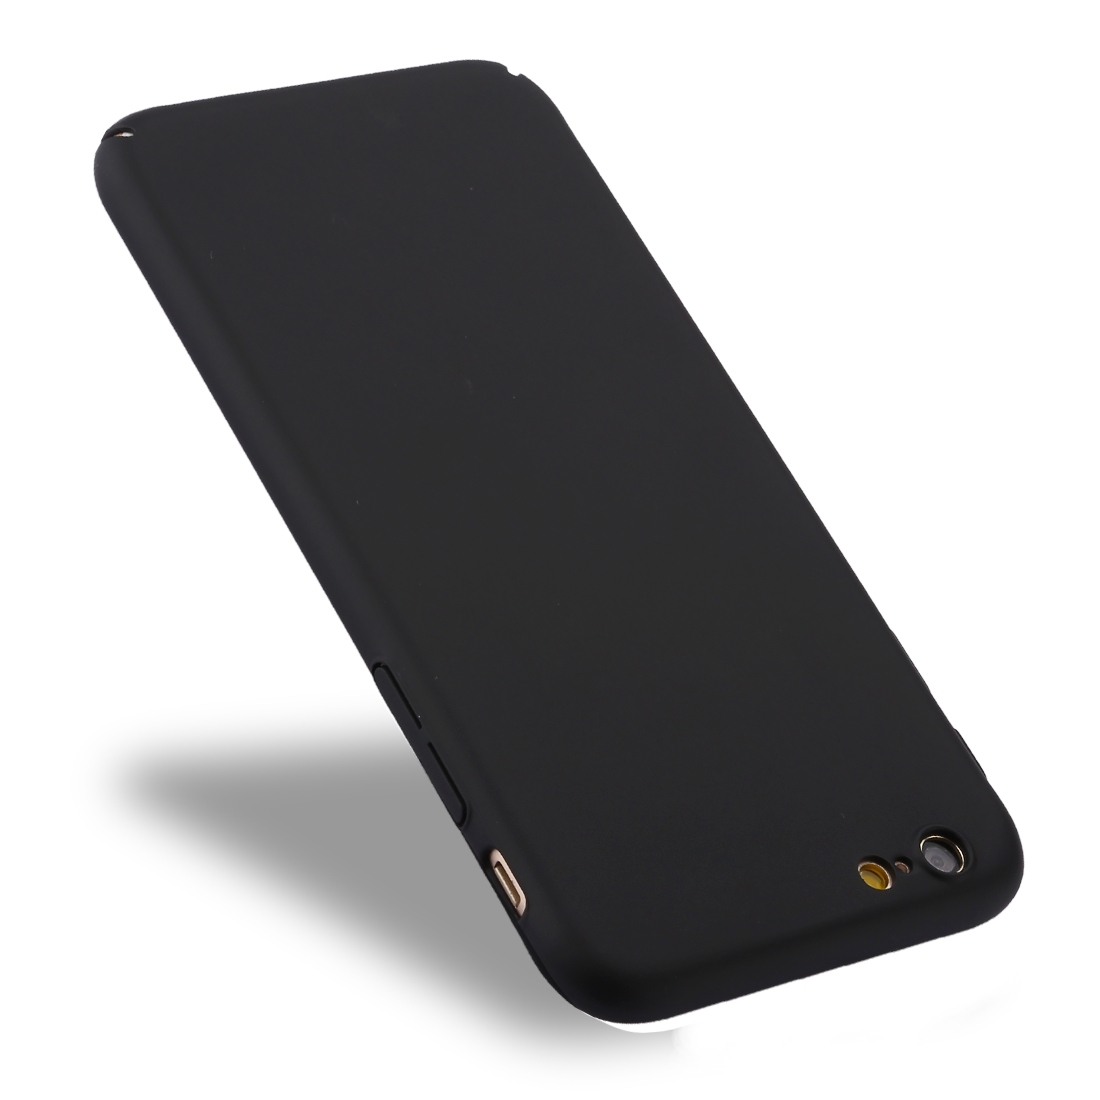 Pogumovaný plastový kryt na iPhone 6/ 6S - černá